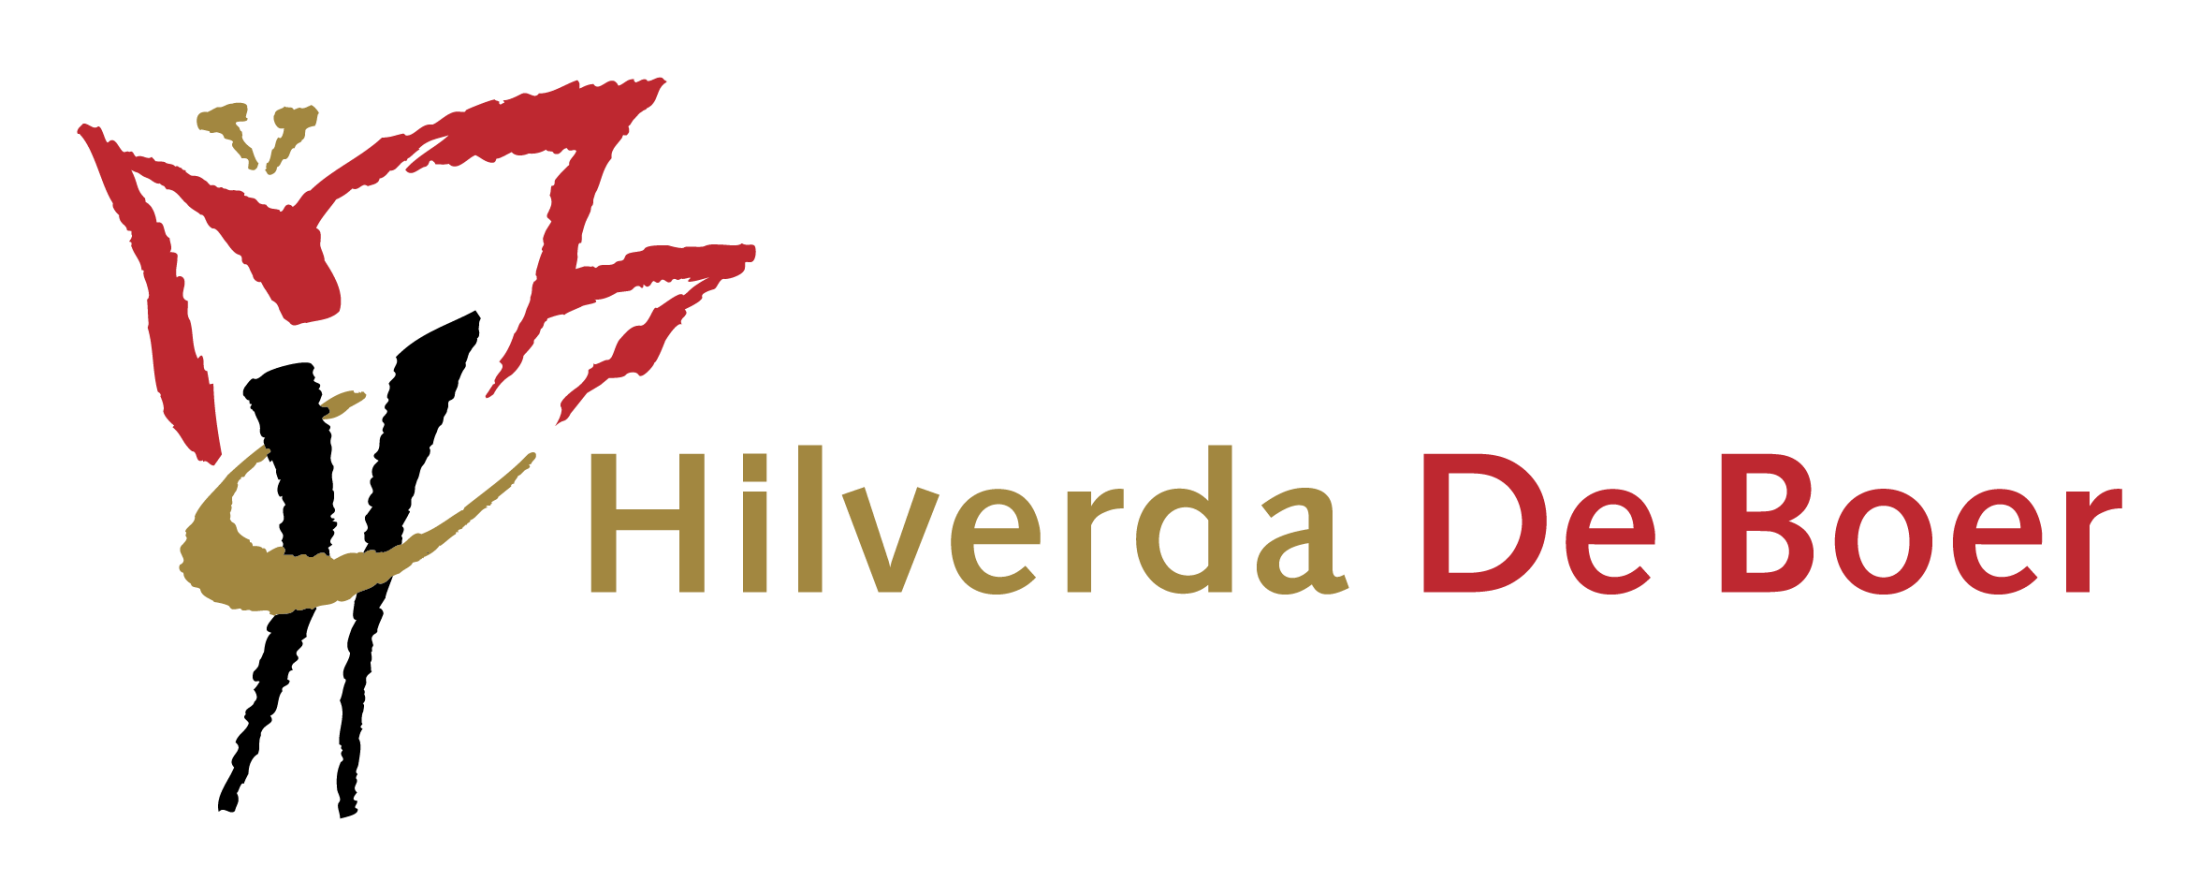 Hilverda De Boer - logo